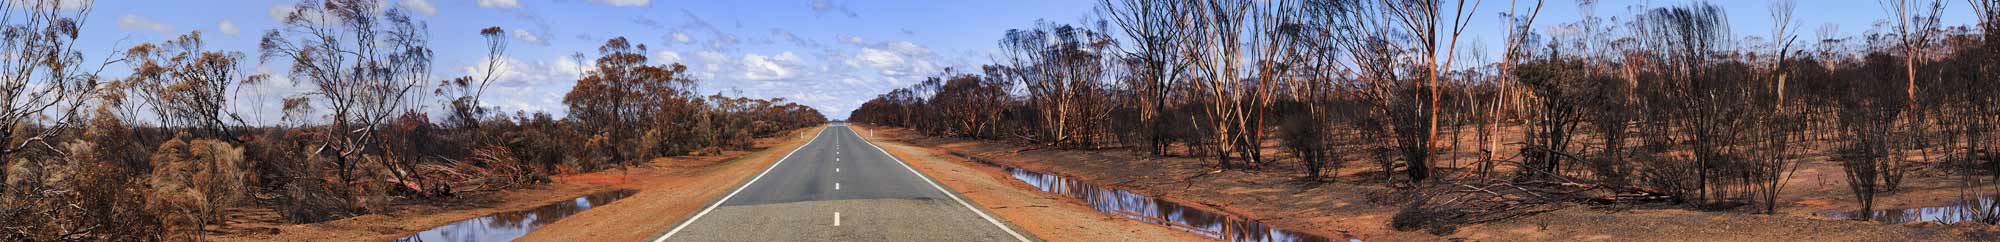 Outback Australian road at Albury Wodonga